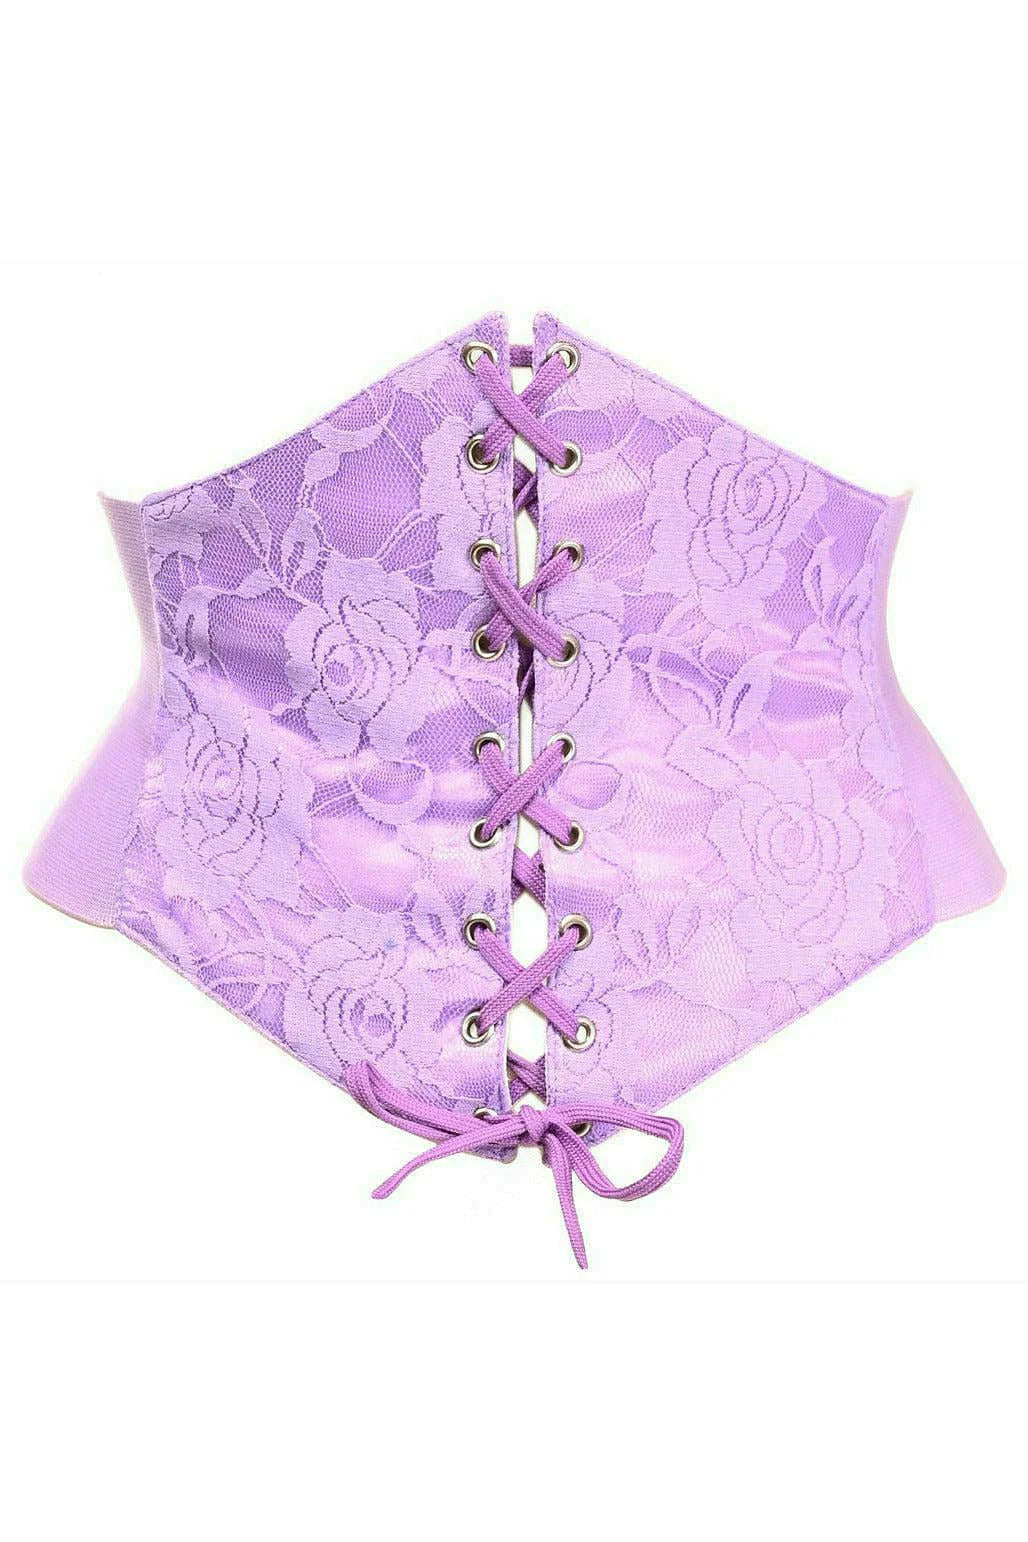 Purple Lace Overlay Ribbon Belt Overbust Boned Corset Top Lace Up Bustier  Zip Closure S M L XL